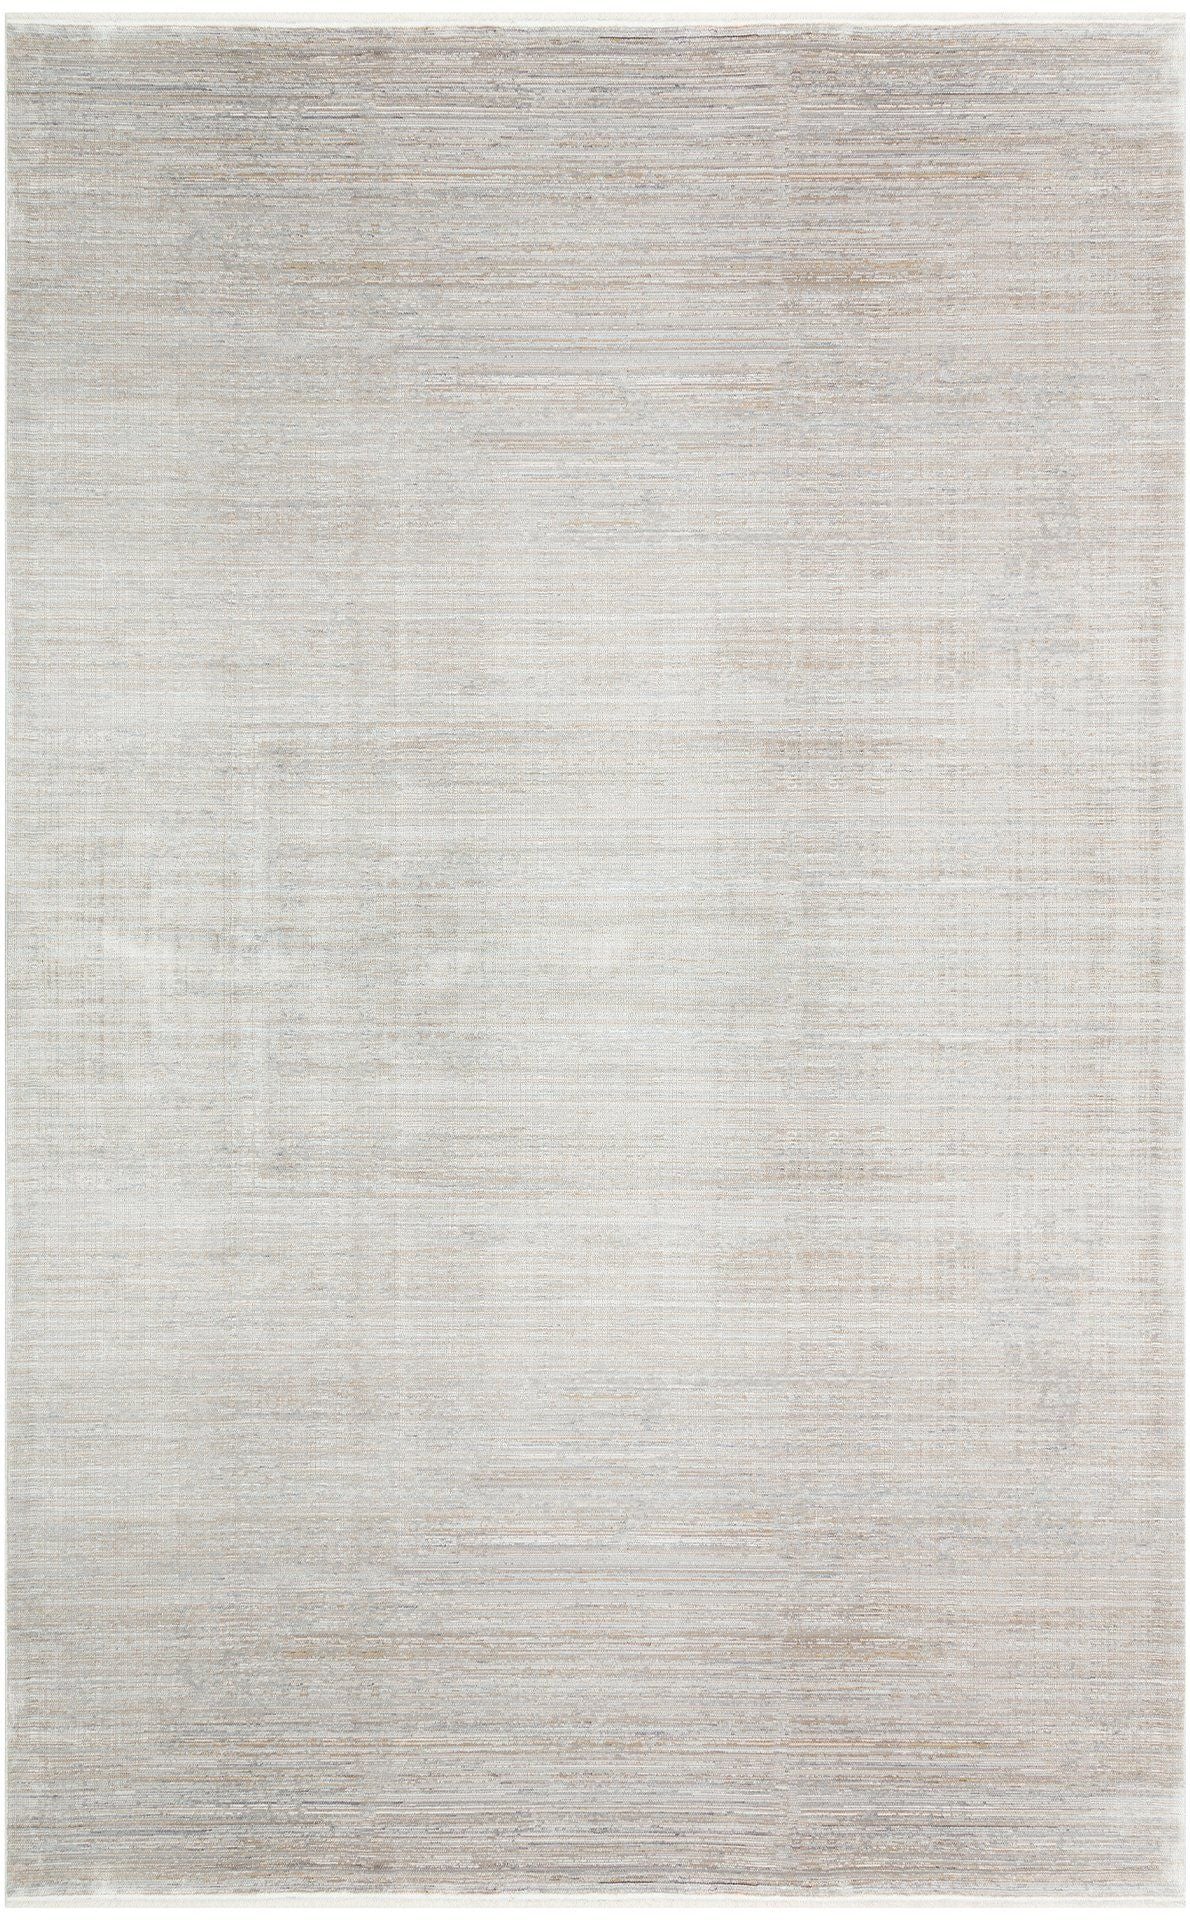 Mhl 02 - Sten - Hall tæppe (100 x 200)